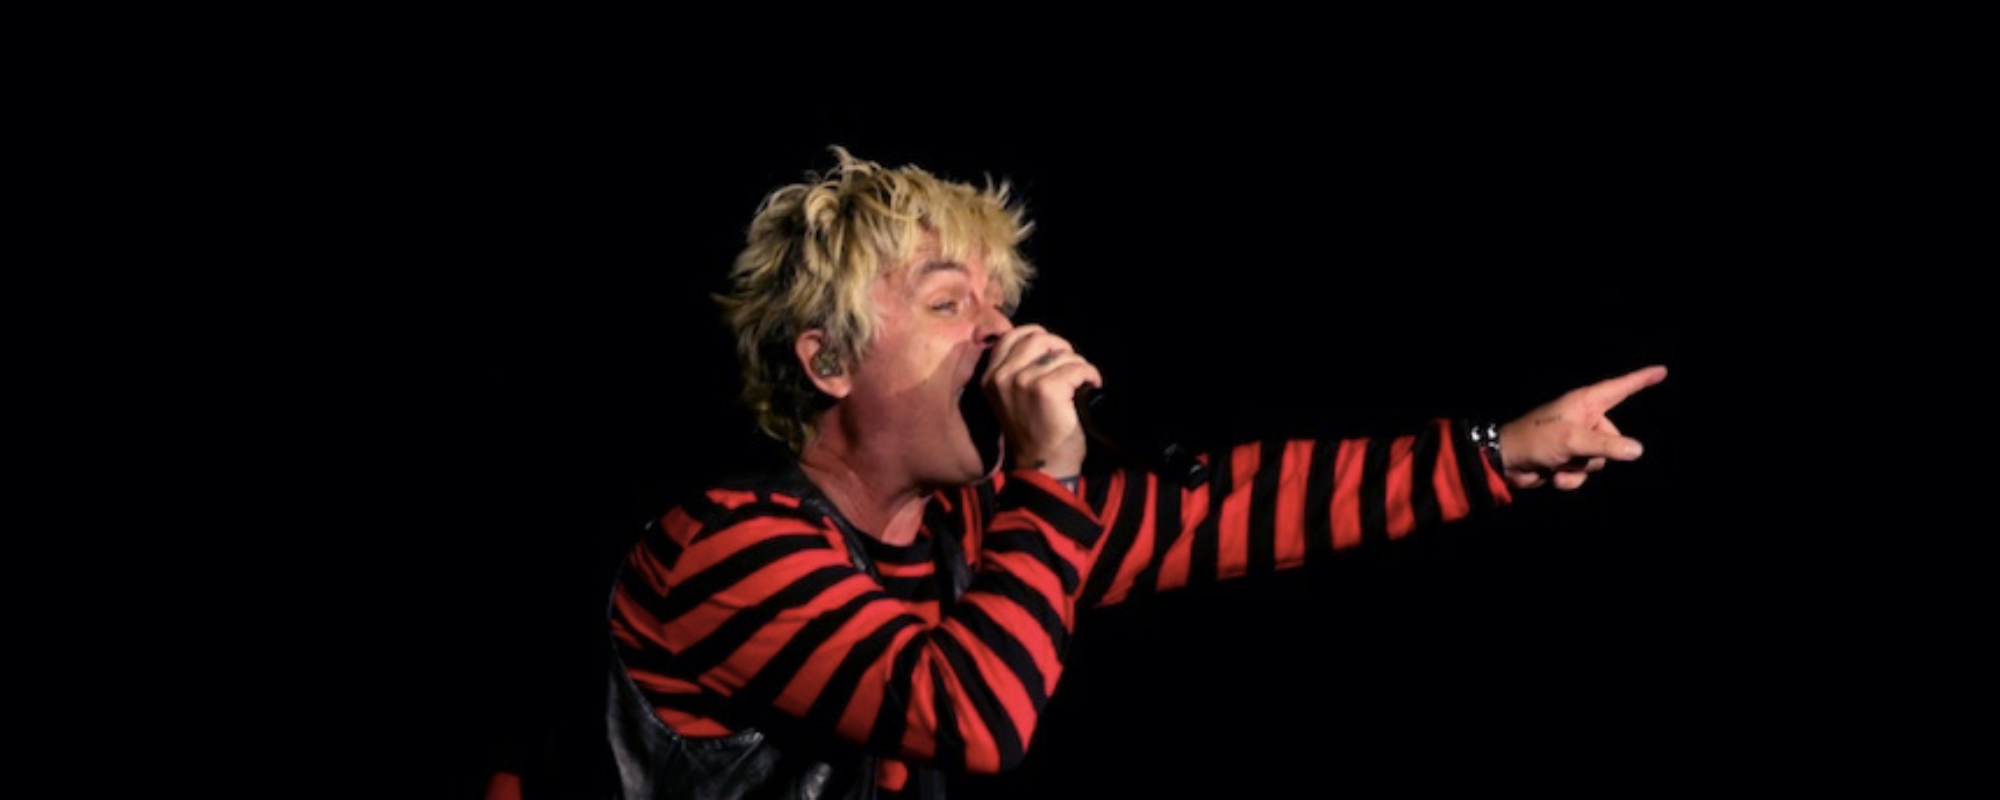 Green Day Explains How New Album ‘Saviors’ “Bridges the Gap” Between ‘Dookie’ and ‘American Idiot’